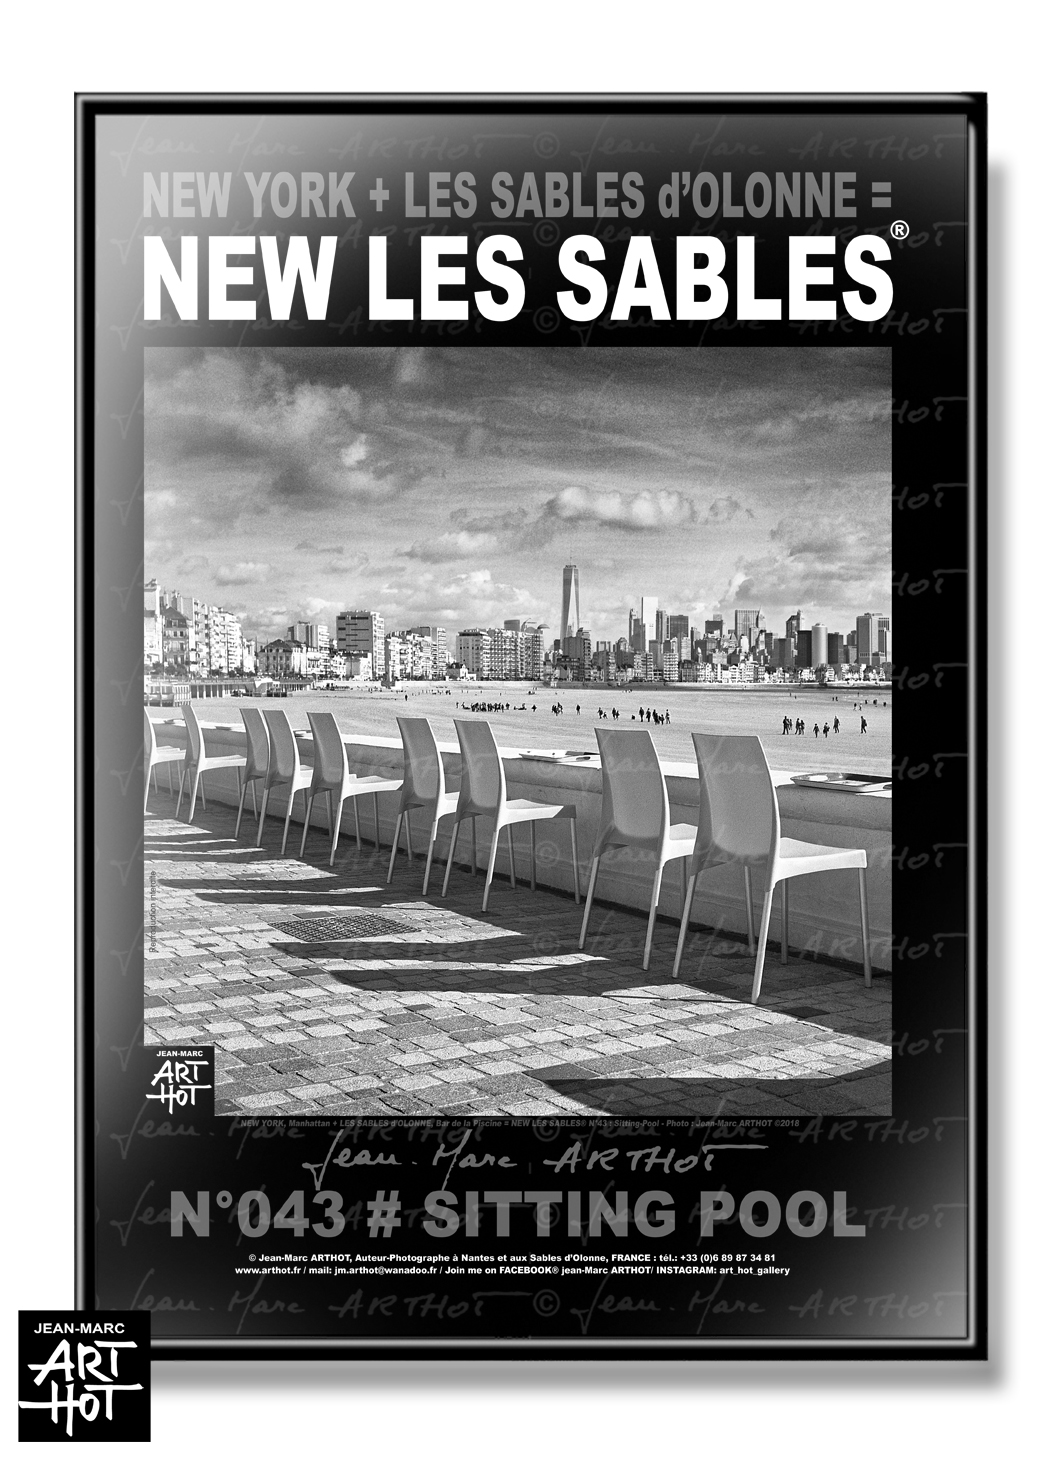 arthot-photo-art-b&amp;w-new-york-vendee-sables-olonne-newlessables-043-chaises-AFFICHE